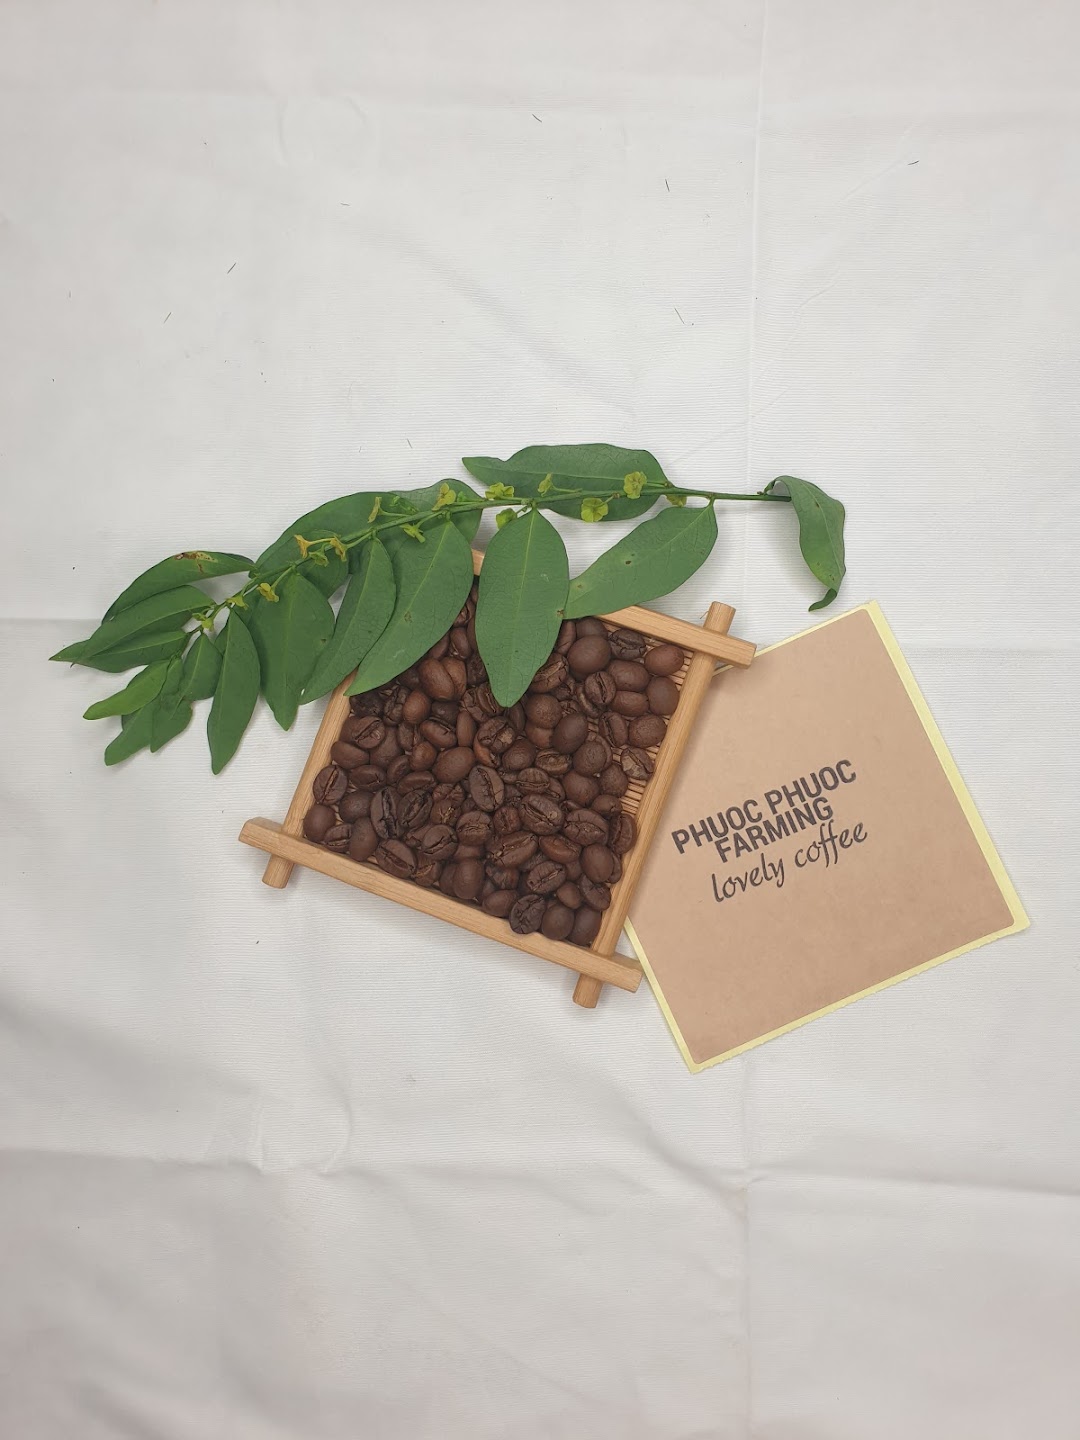 Phuoc Phuoc Farming - Lovely Coffee